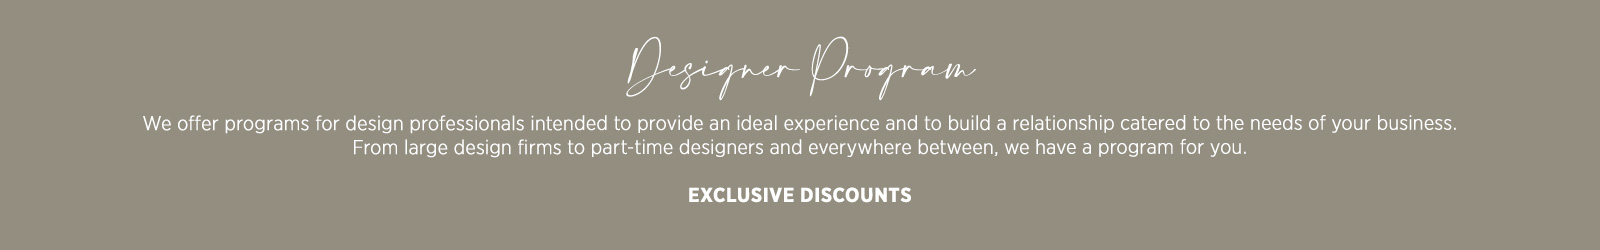 Designer Program - Contact Us